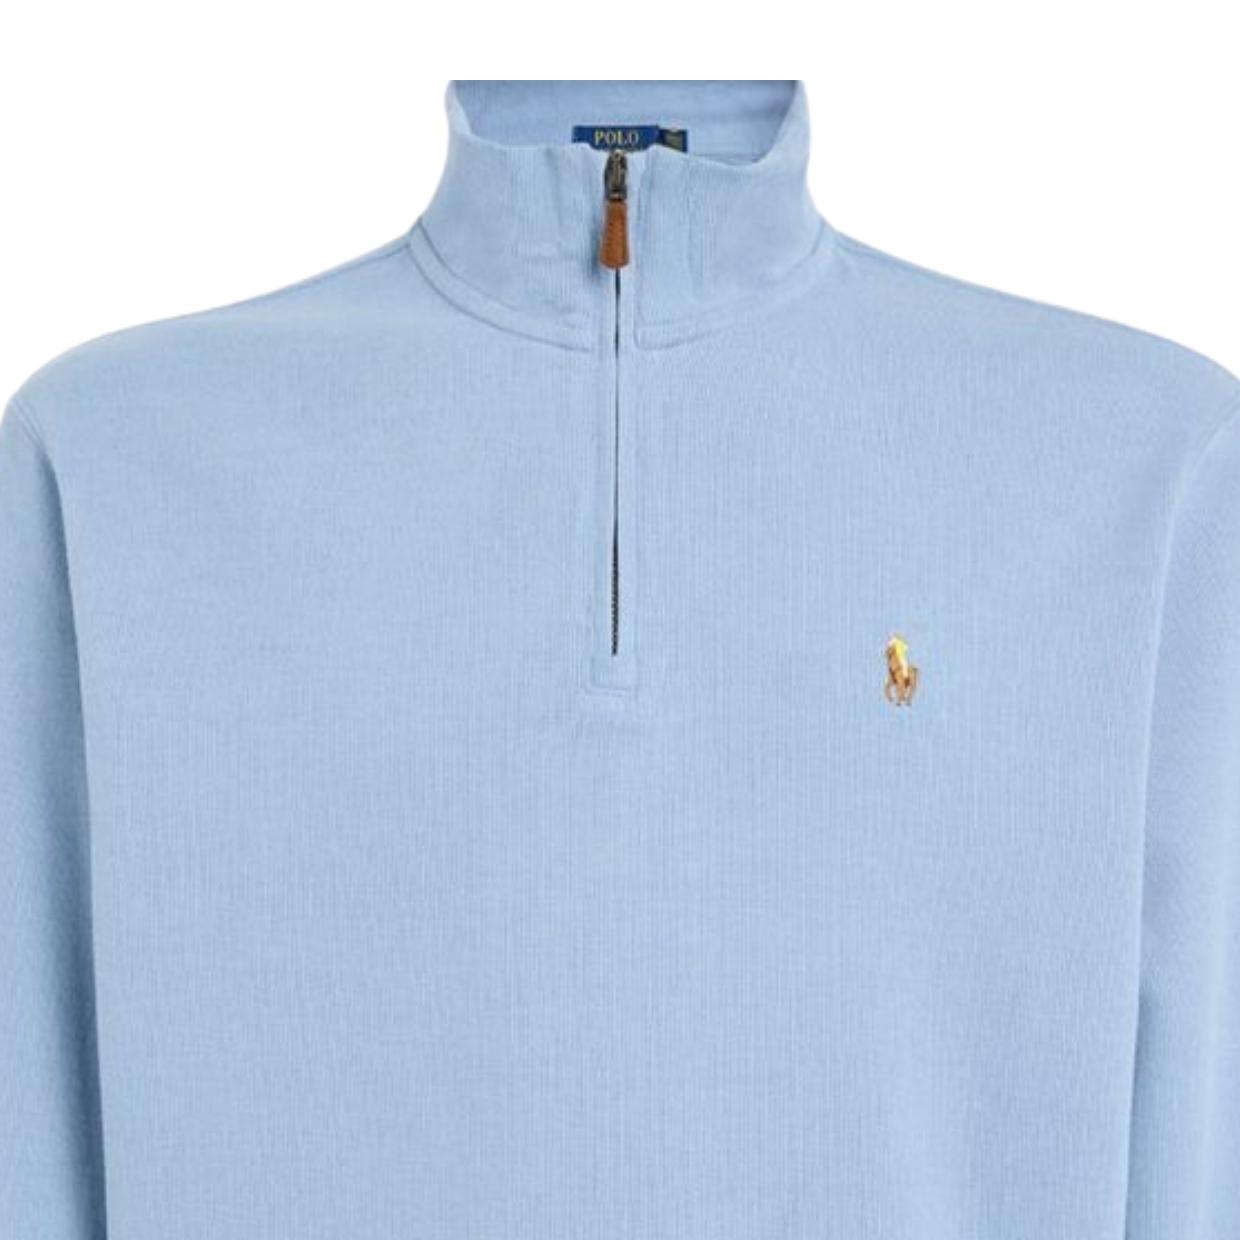 Polo Ralph Lauren Embroidered Logo Blue Half Zip Sweater